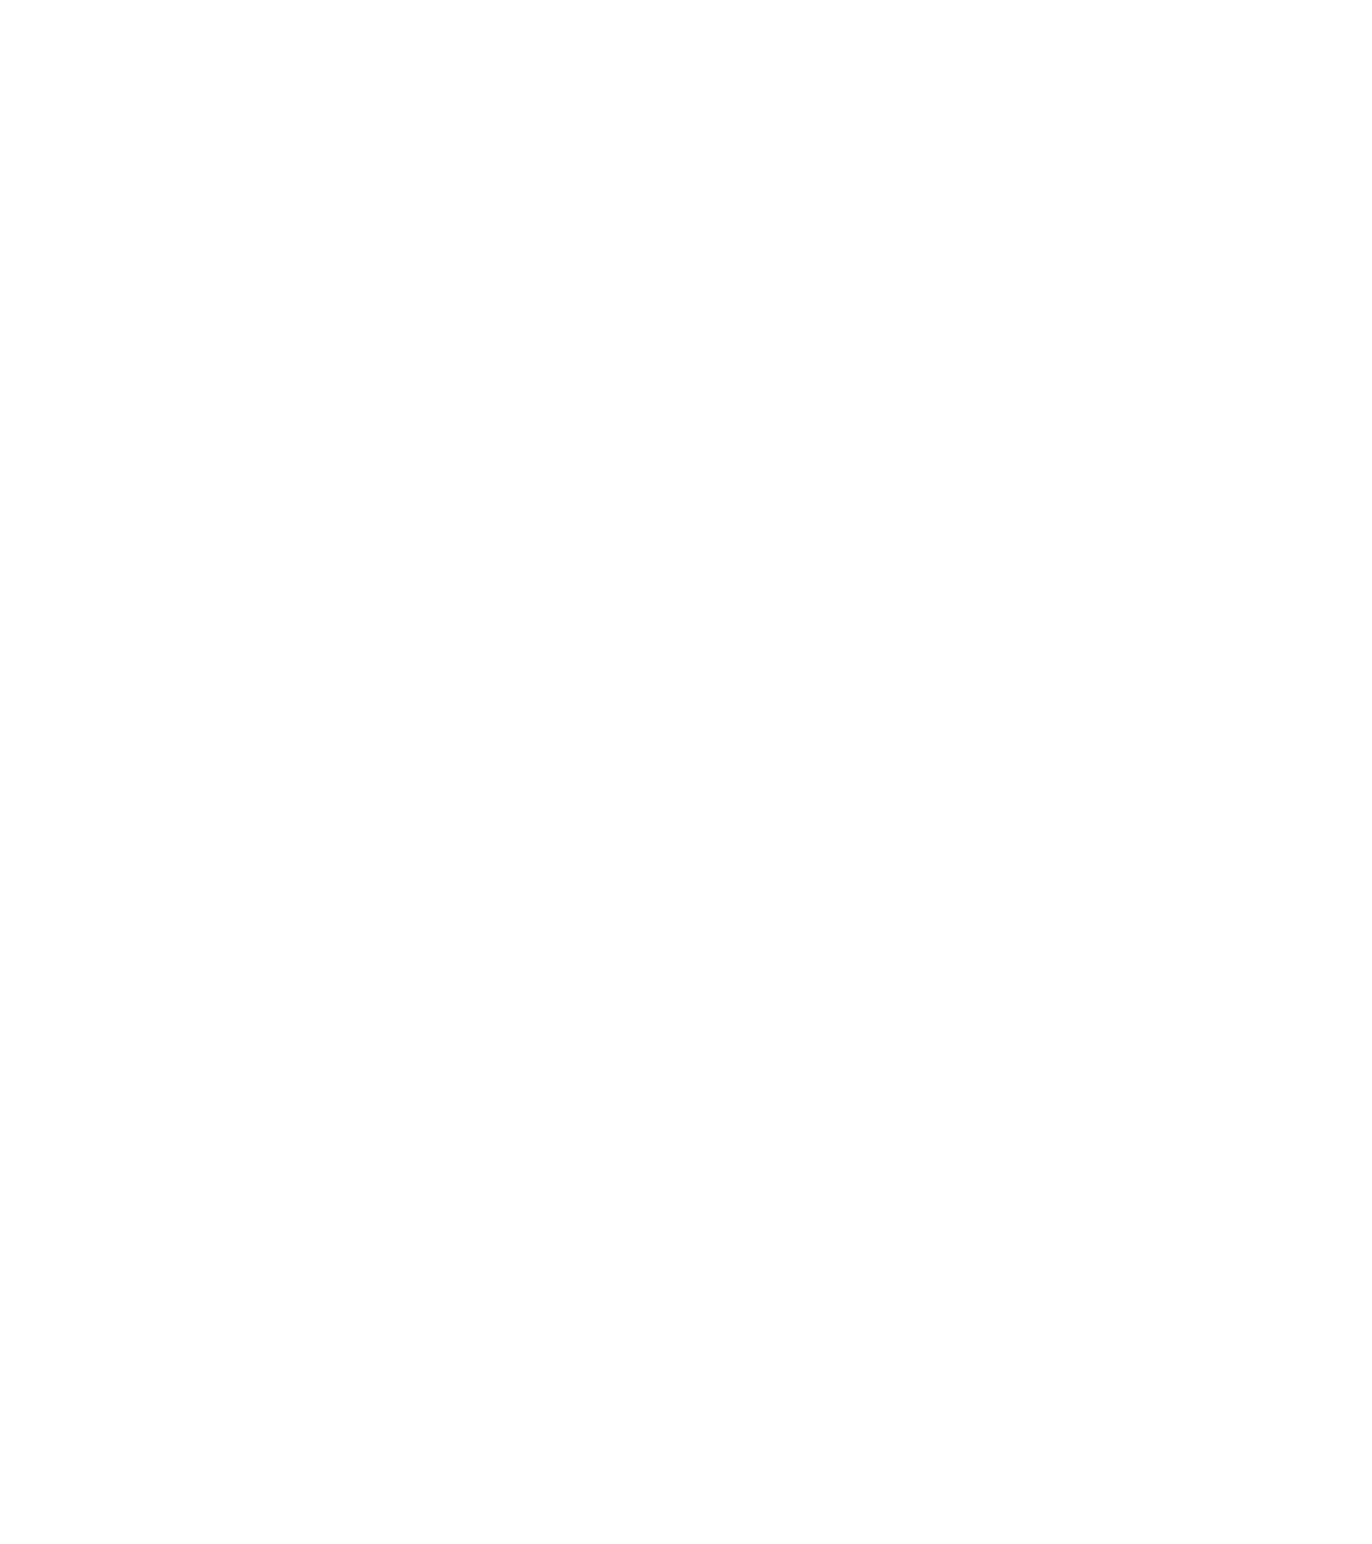 Genting Berhad logo pour fonds sombres (PNG transparent)